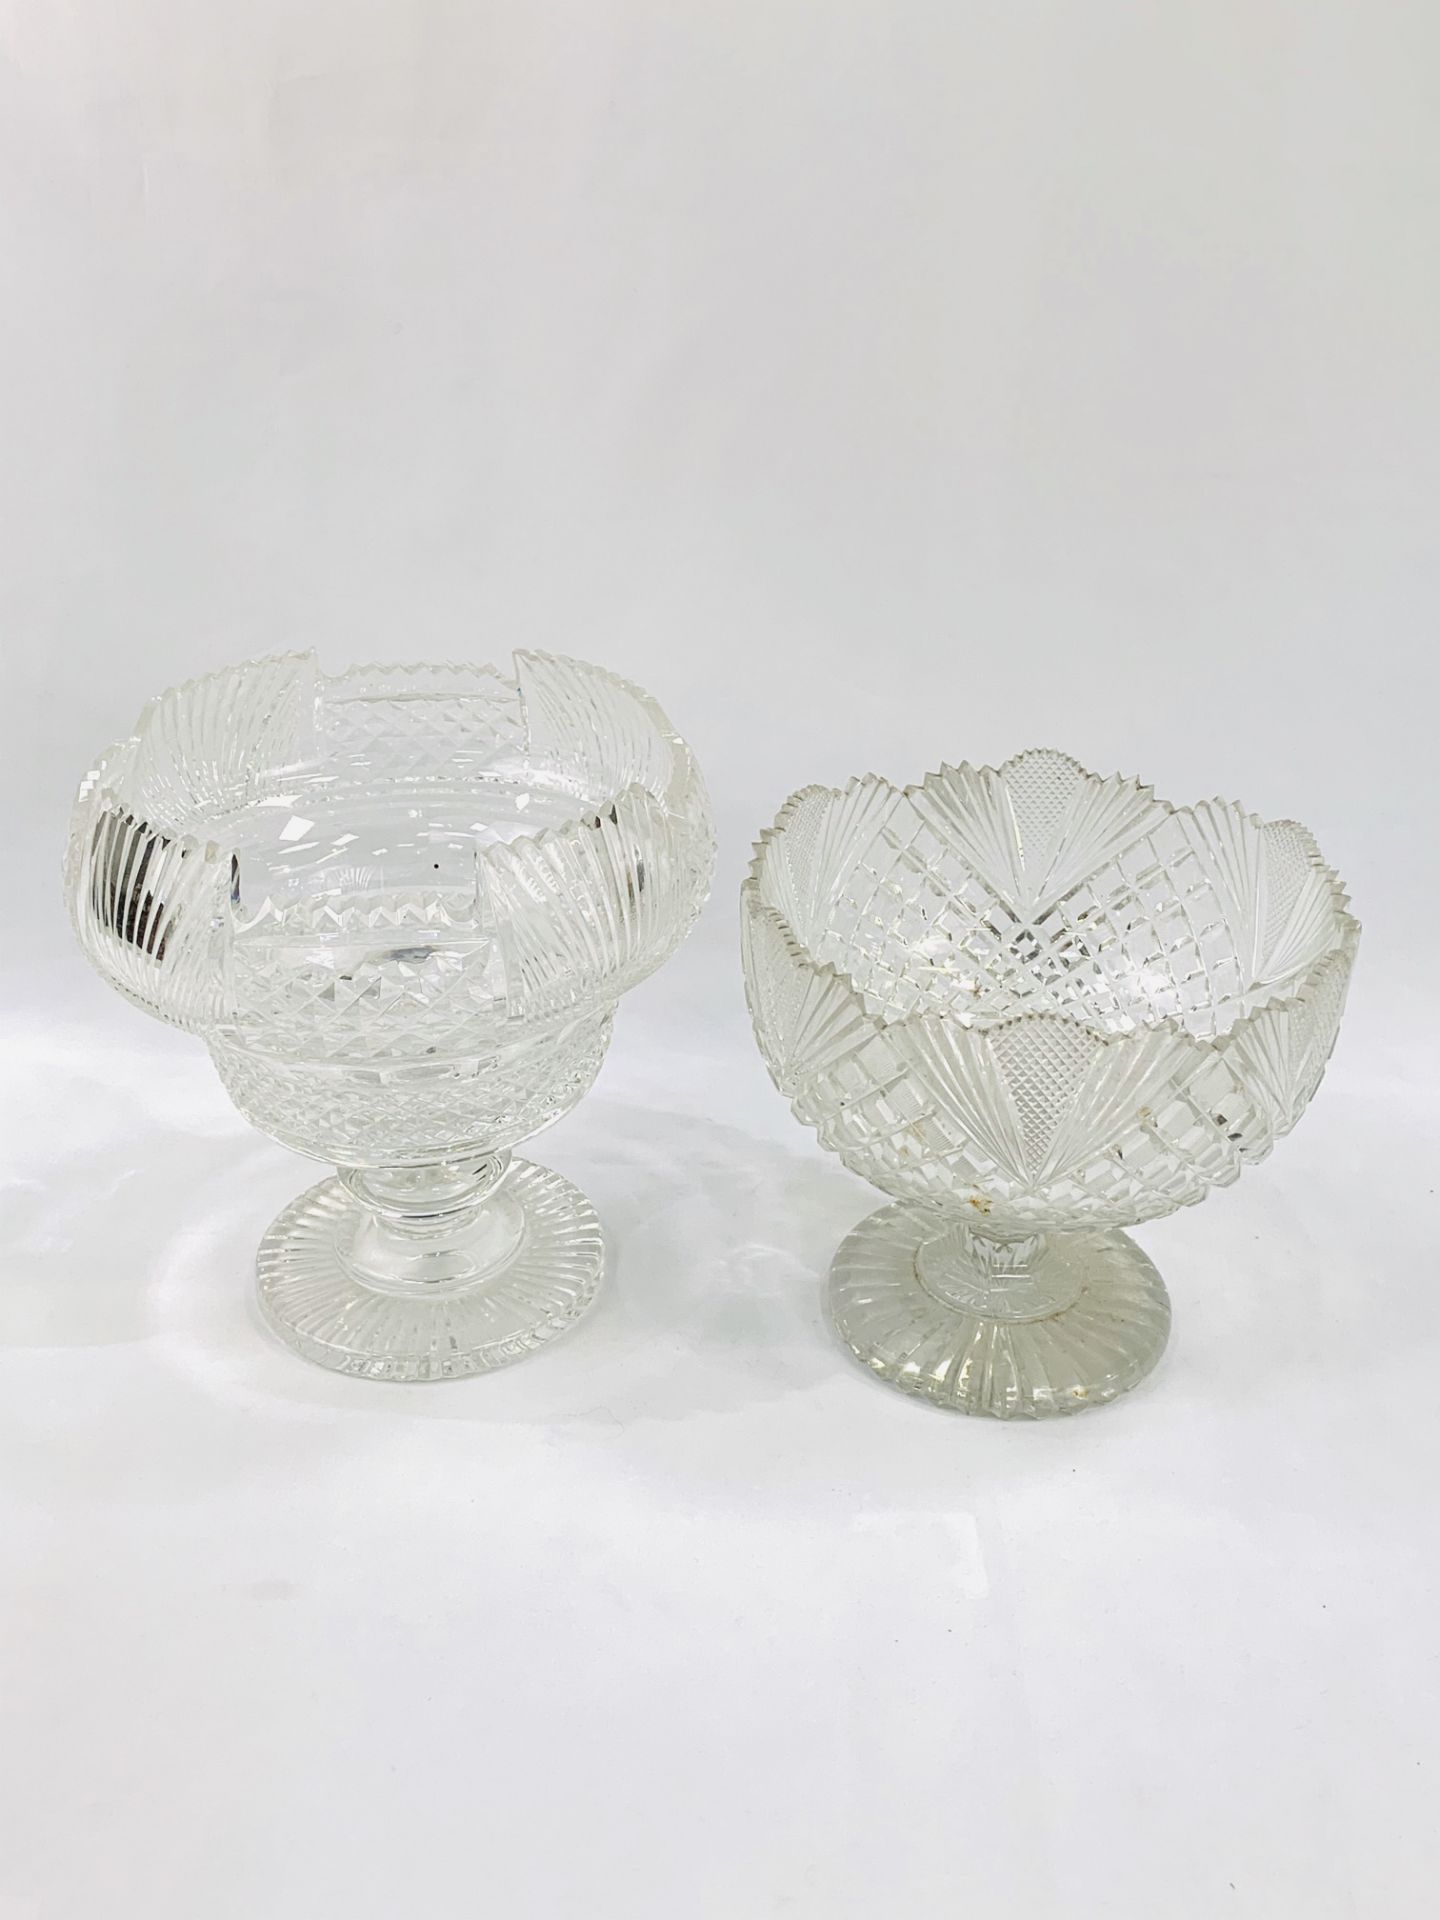 Two cut glass fruit bowls.